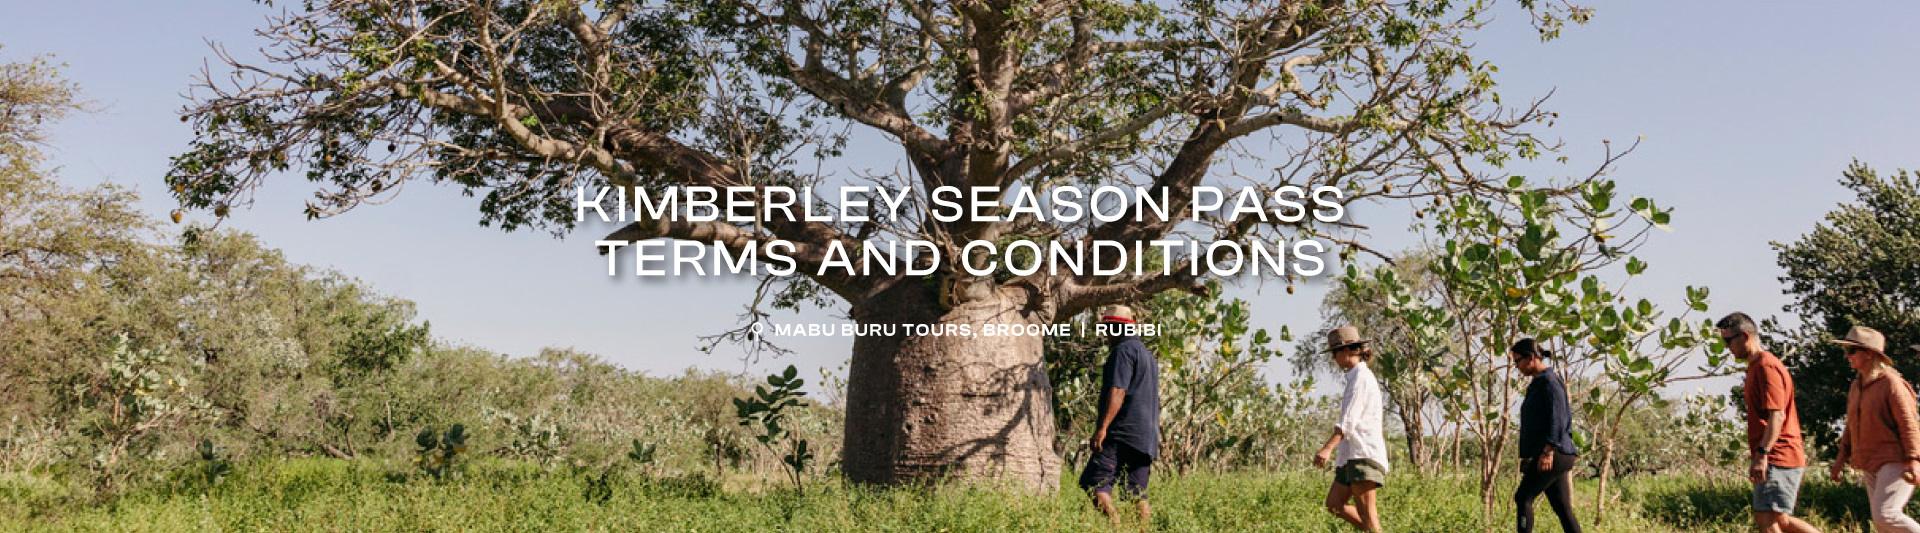 Kimberley season pass campaign termsconditions